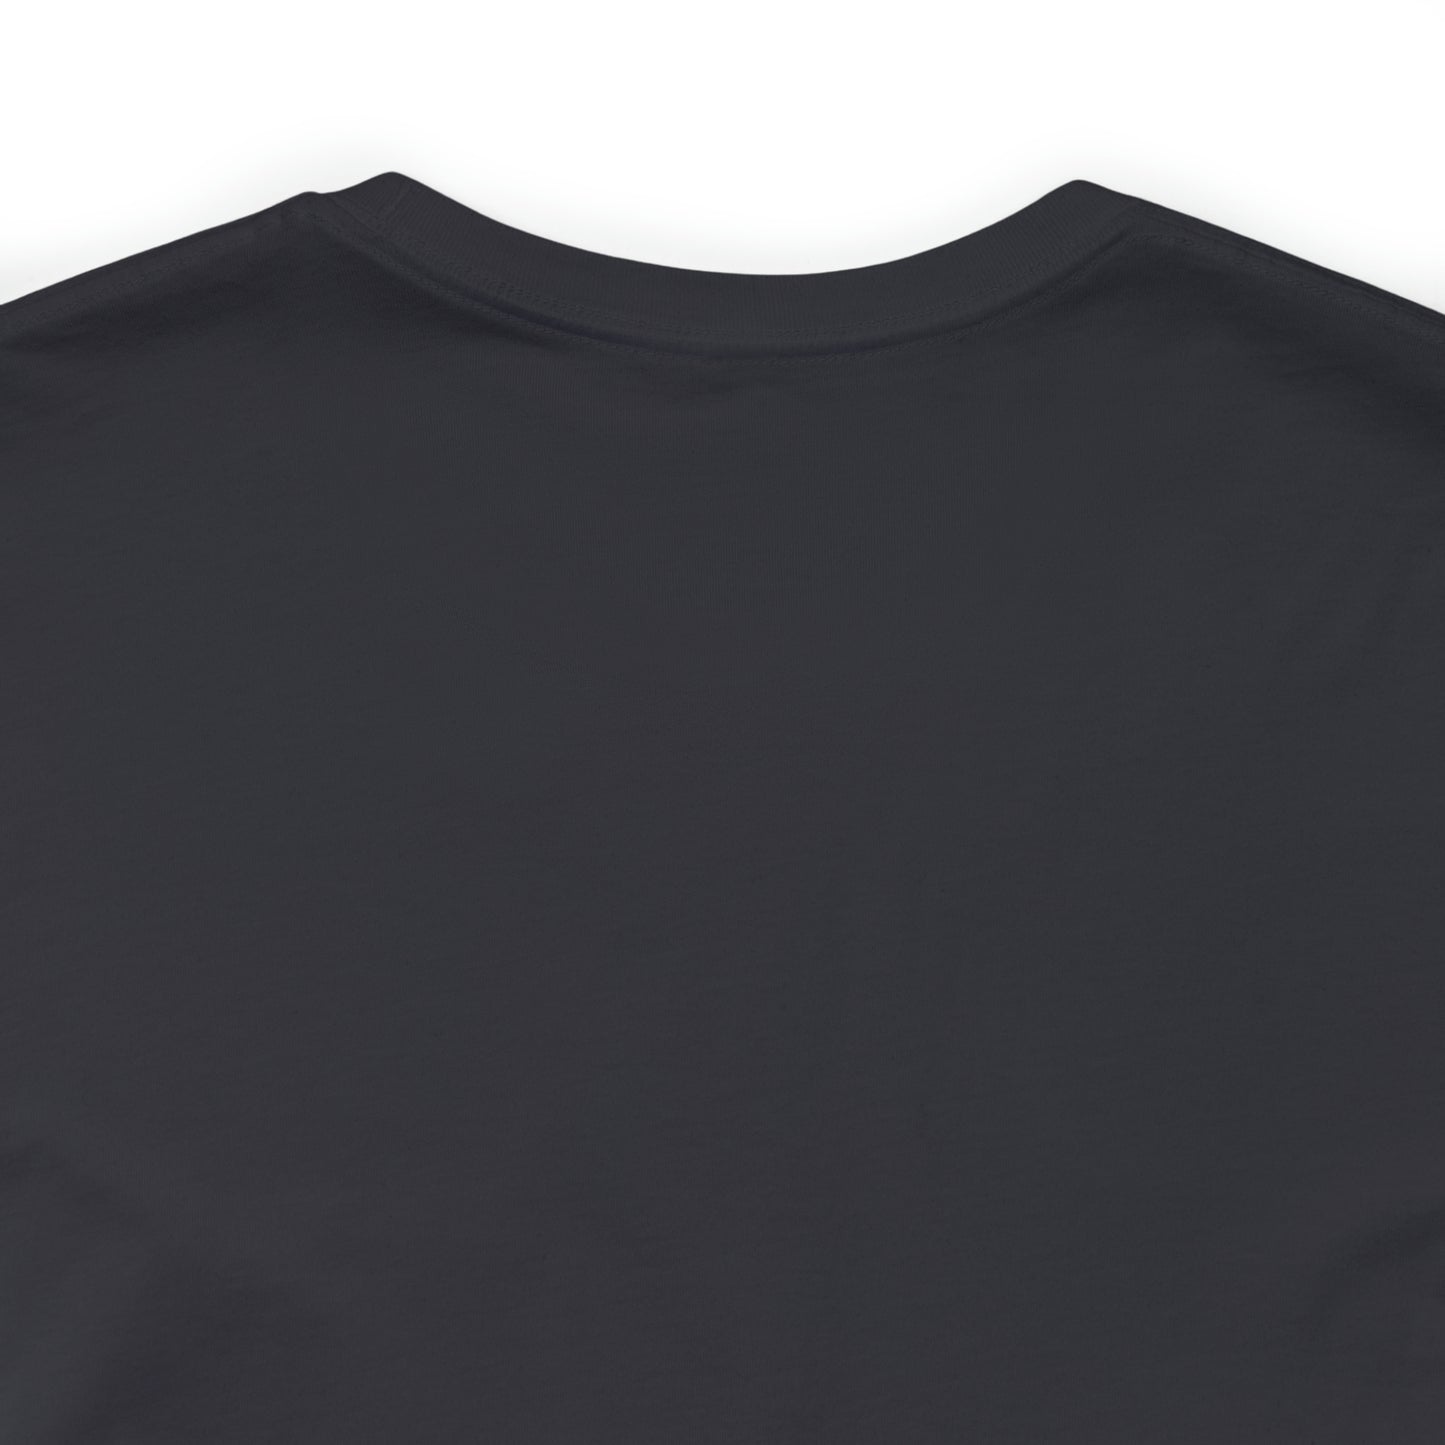 Taylors Version Shirt for Pastor Shirt for minister shirt for clergy shirt for seminarian shirt Short Sleeve Tee